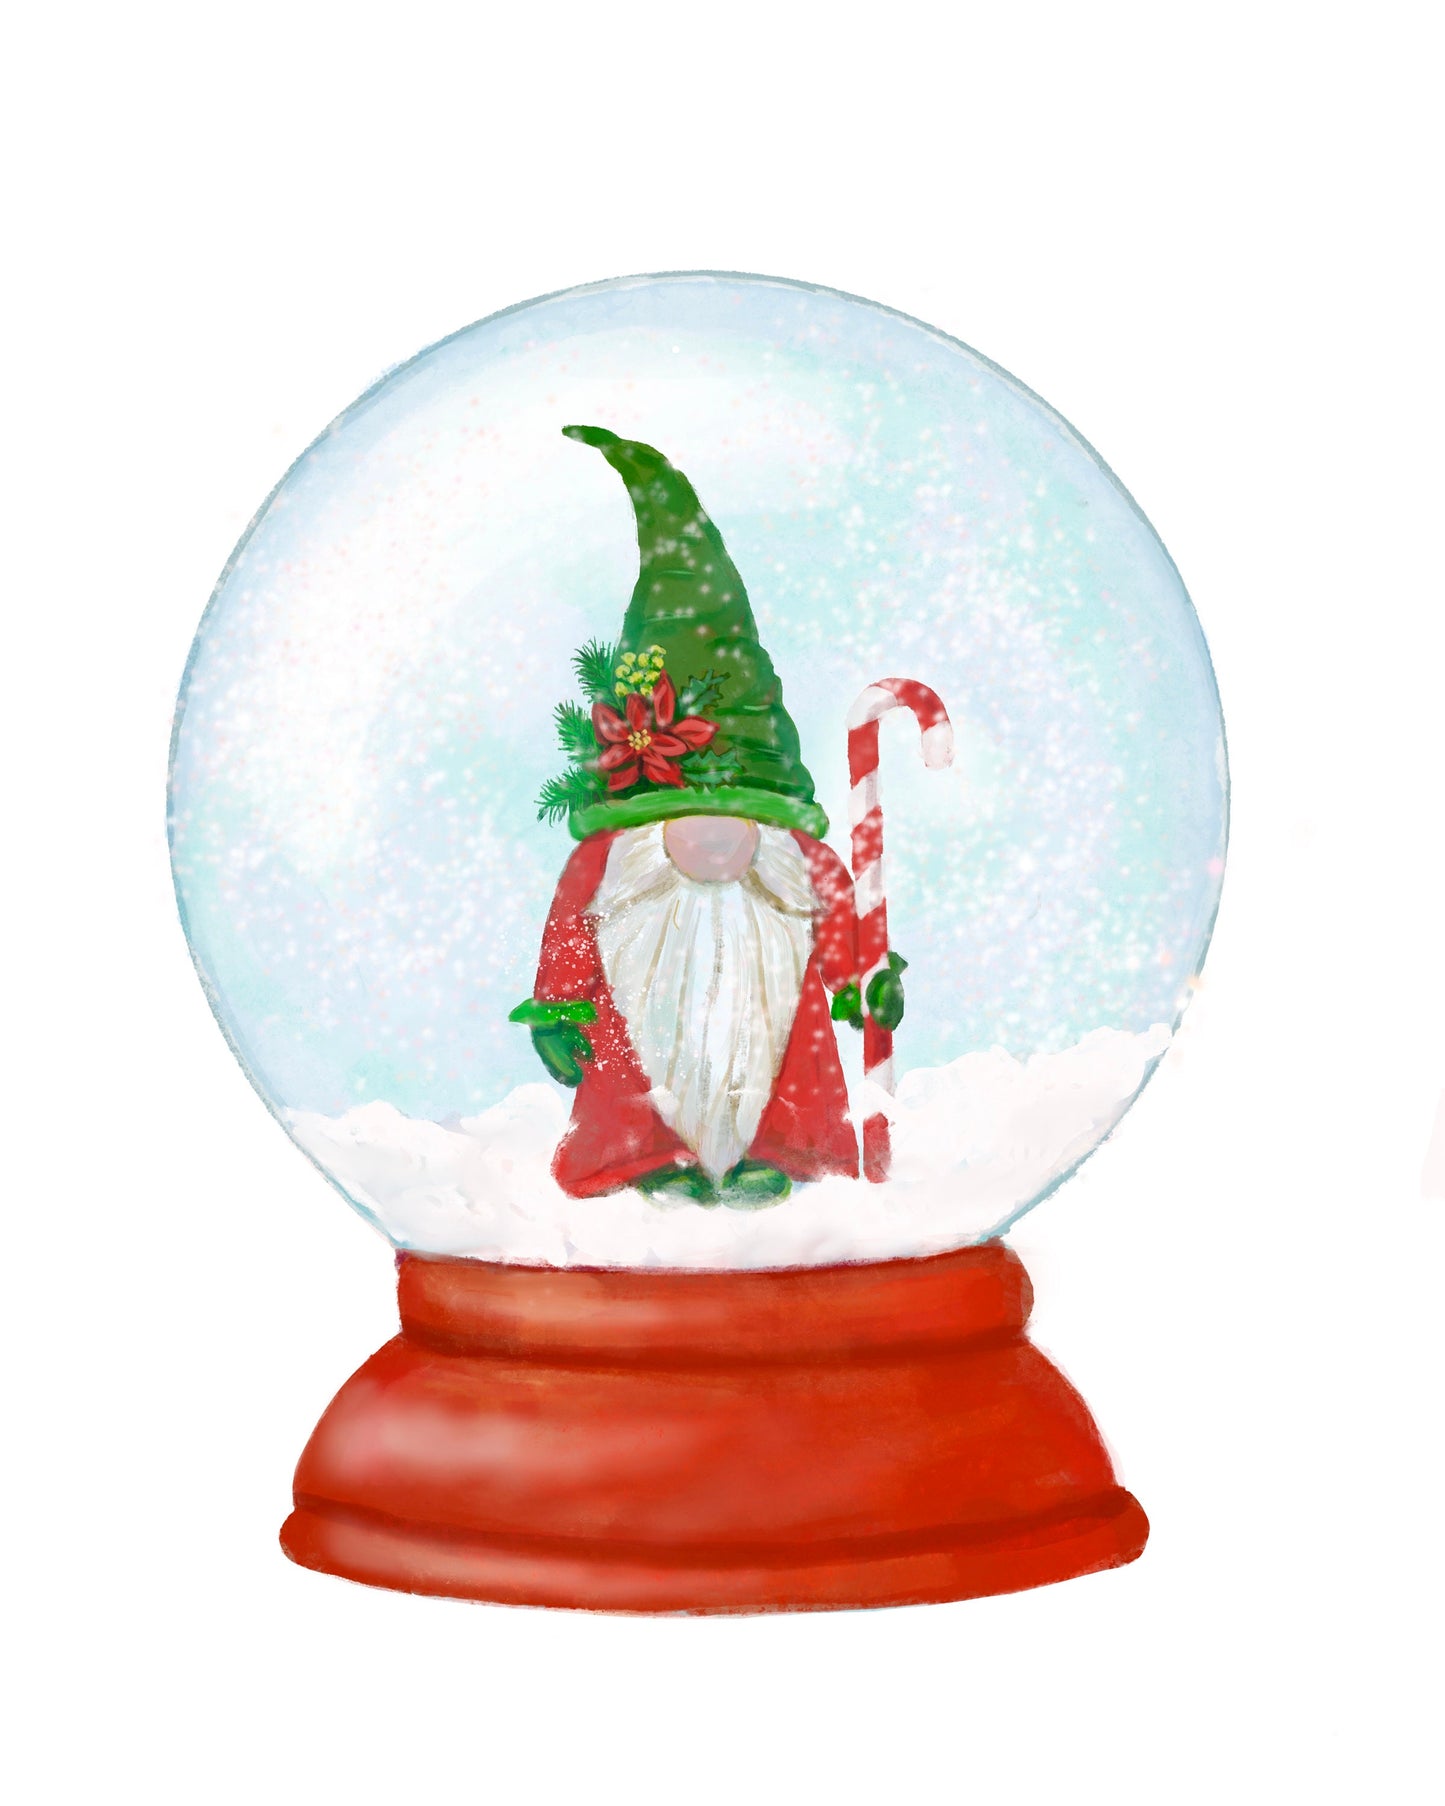 Christmas Gnome Snow Globe Print, Winter Christmas Art, Gnome Gift, New Years Art, Winter Home Decor, Xmas Snow Globe, Unique Wall Art